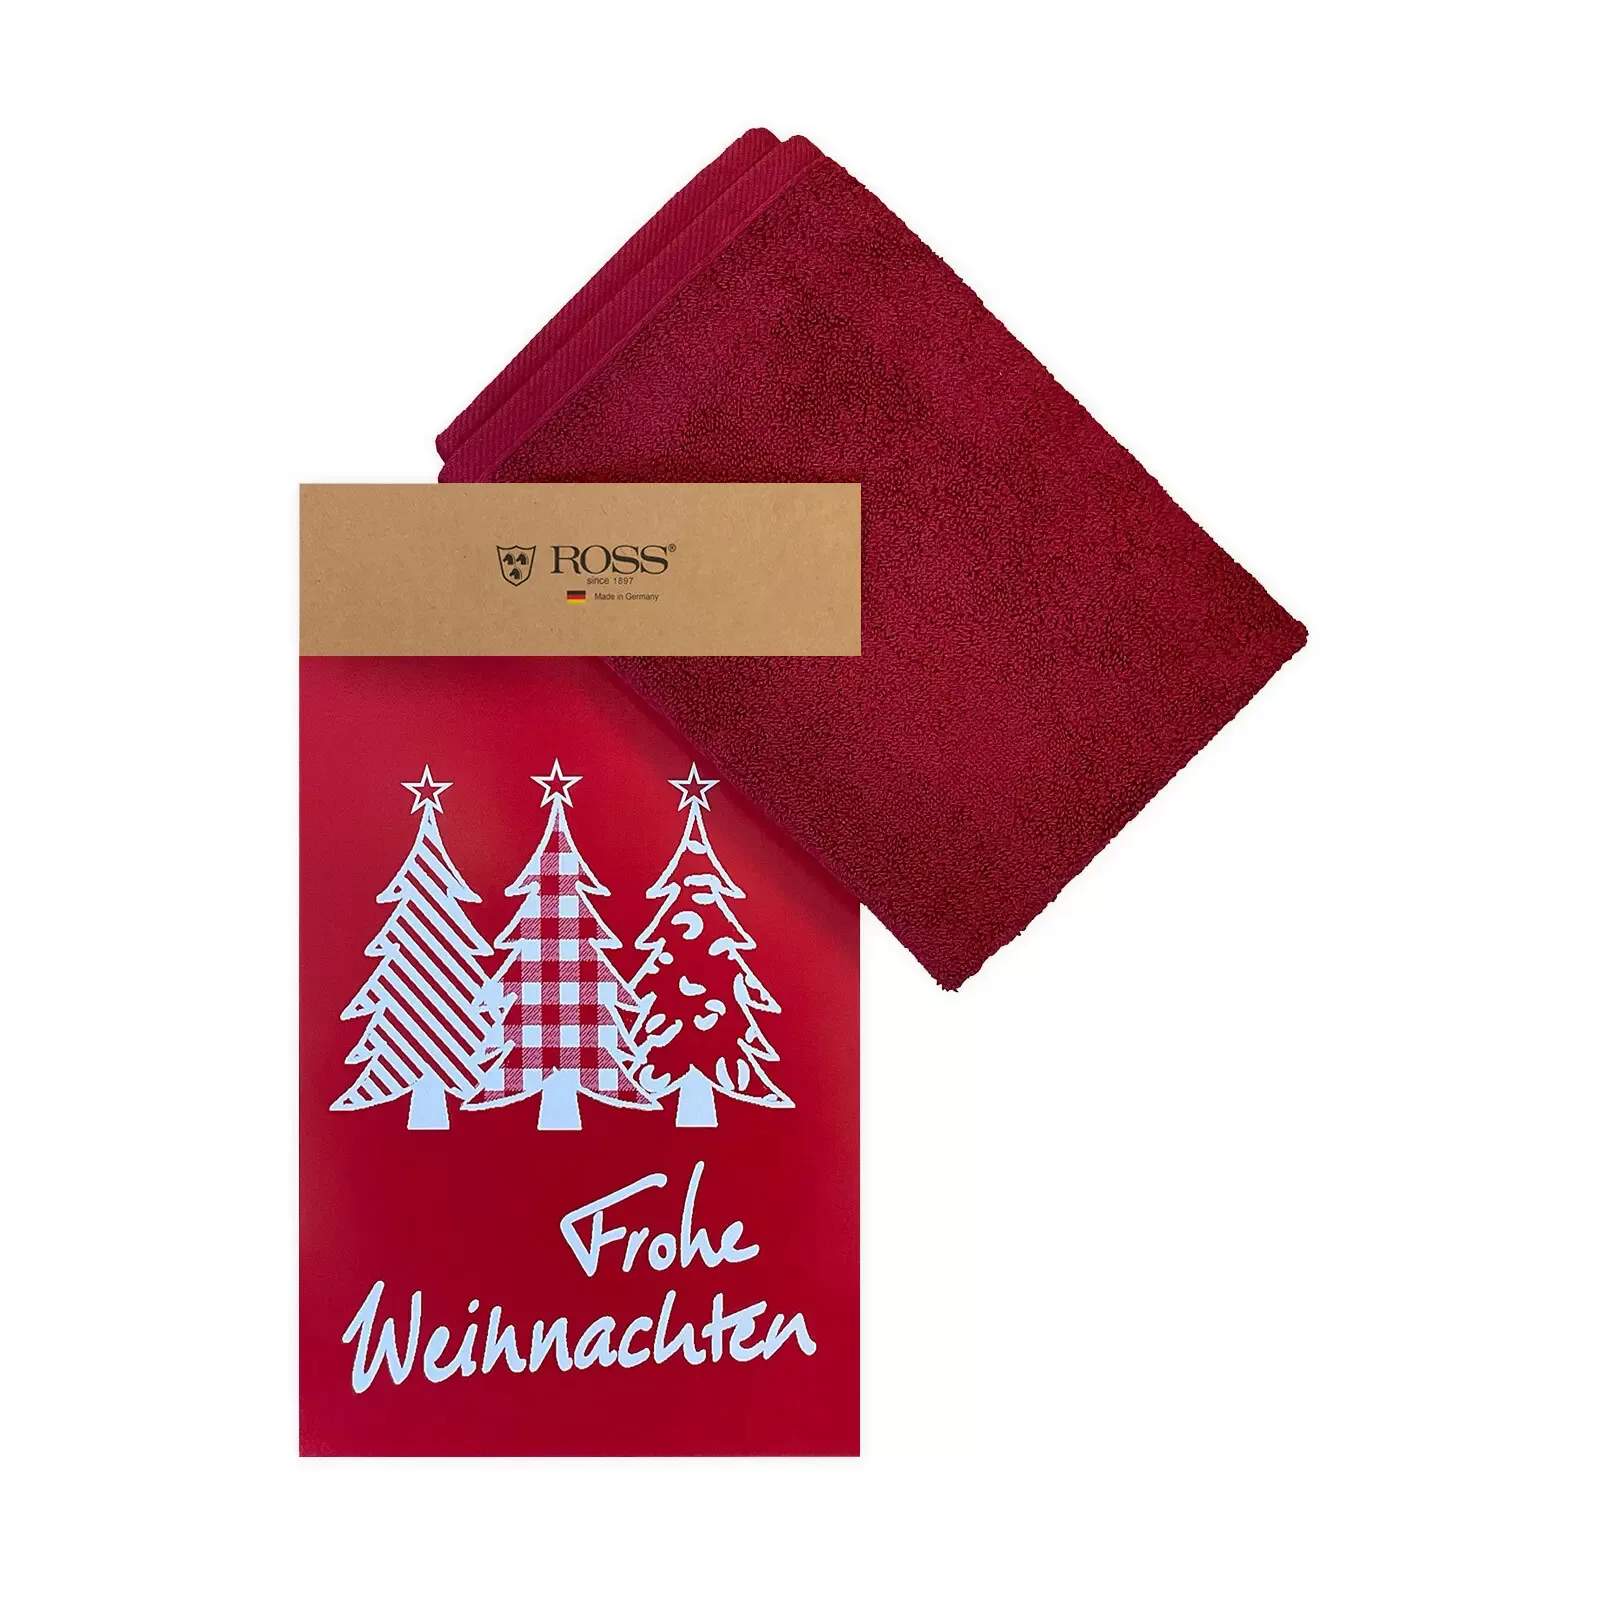 Ross 2er Baumwoll Geschirrtuch Set Weihnachtsbäume rot günstig online kaufen